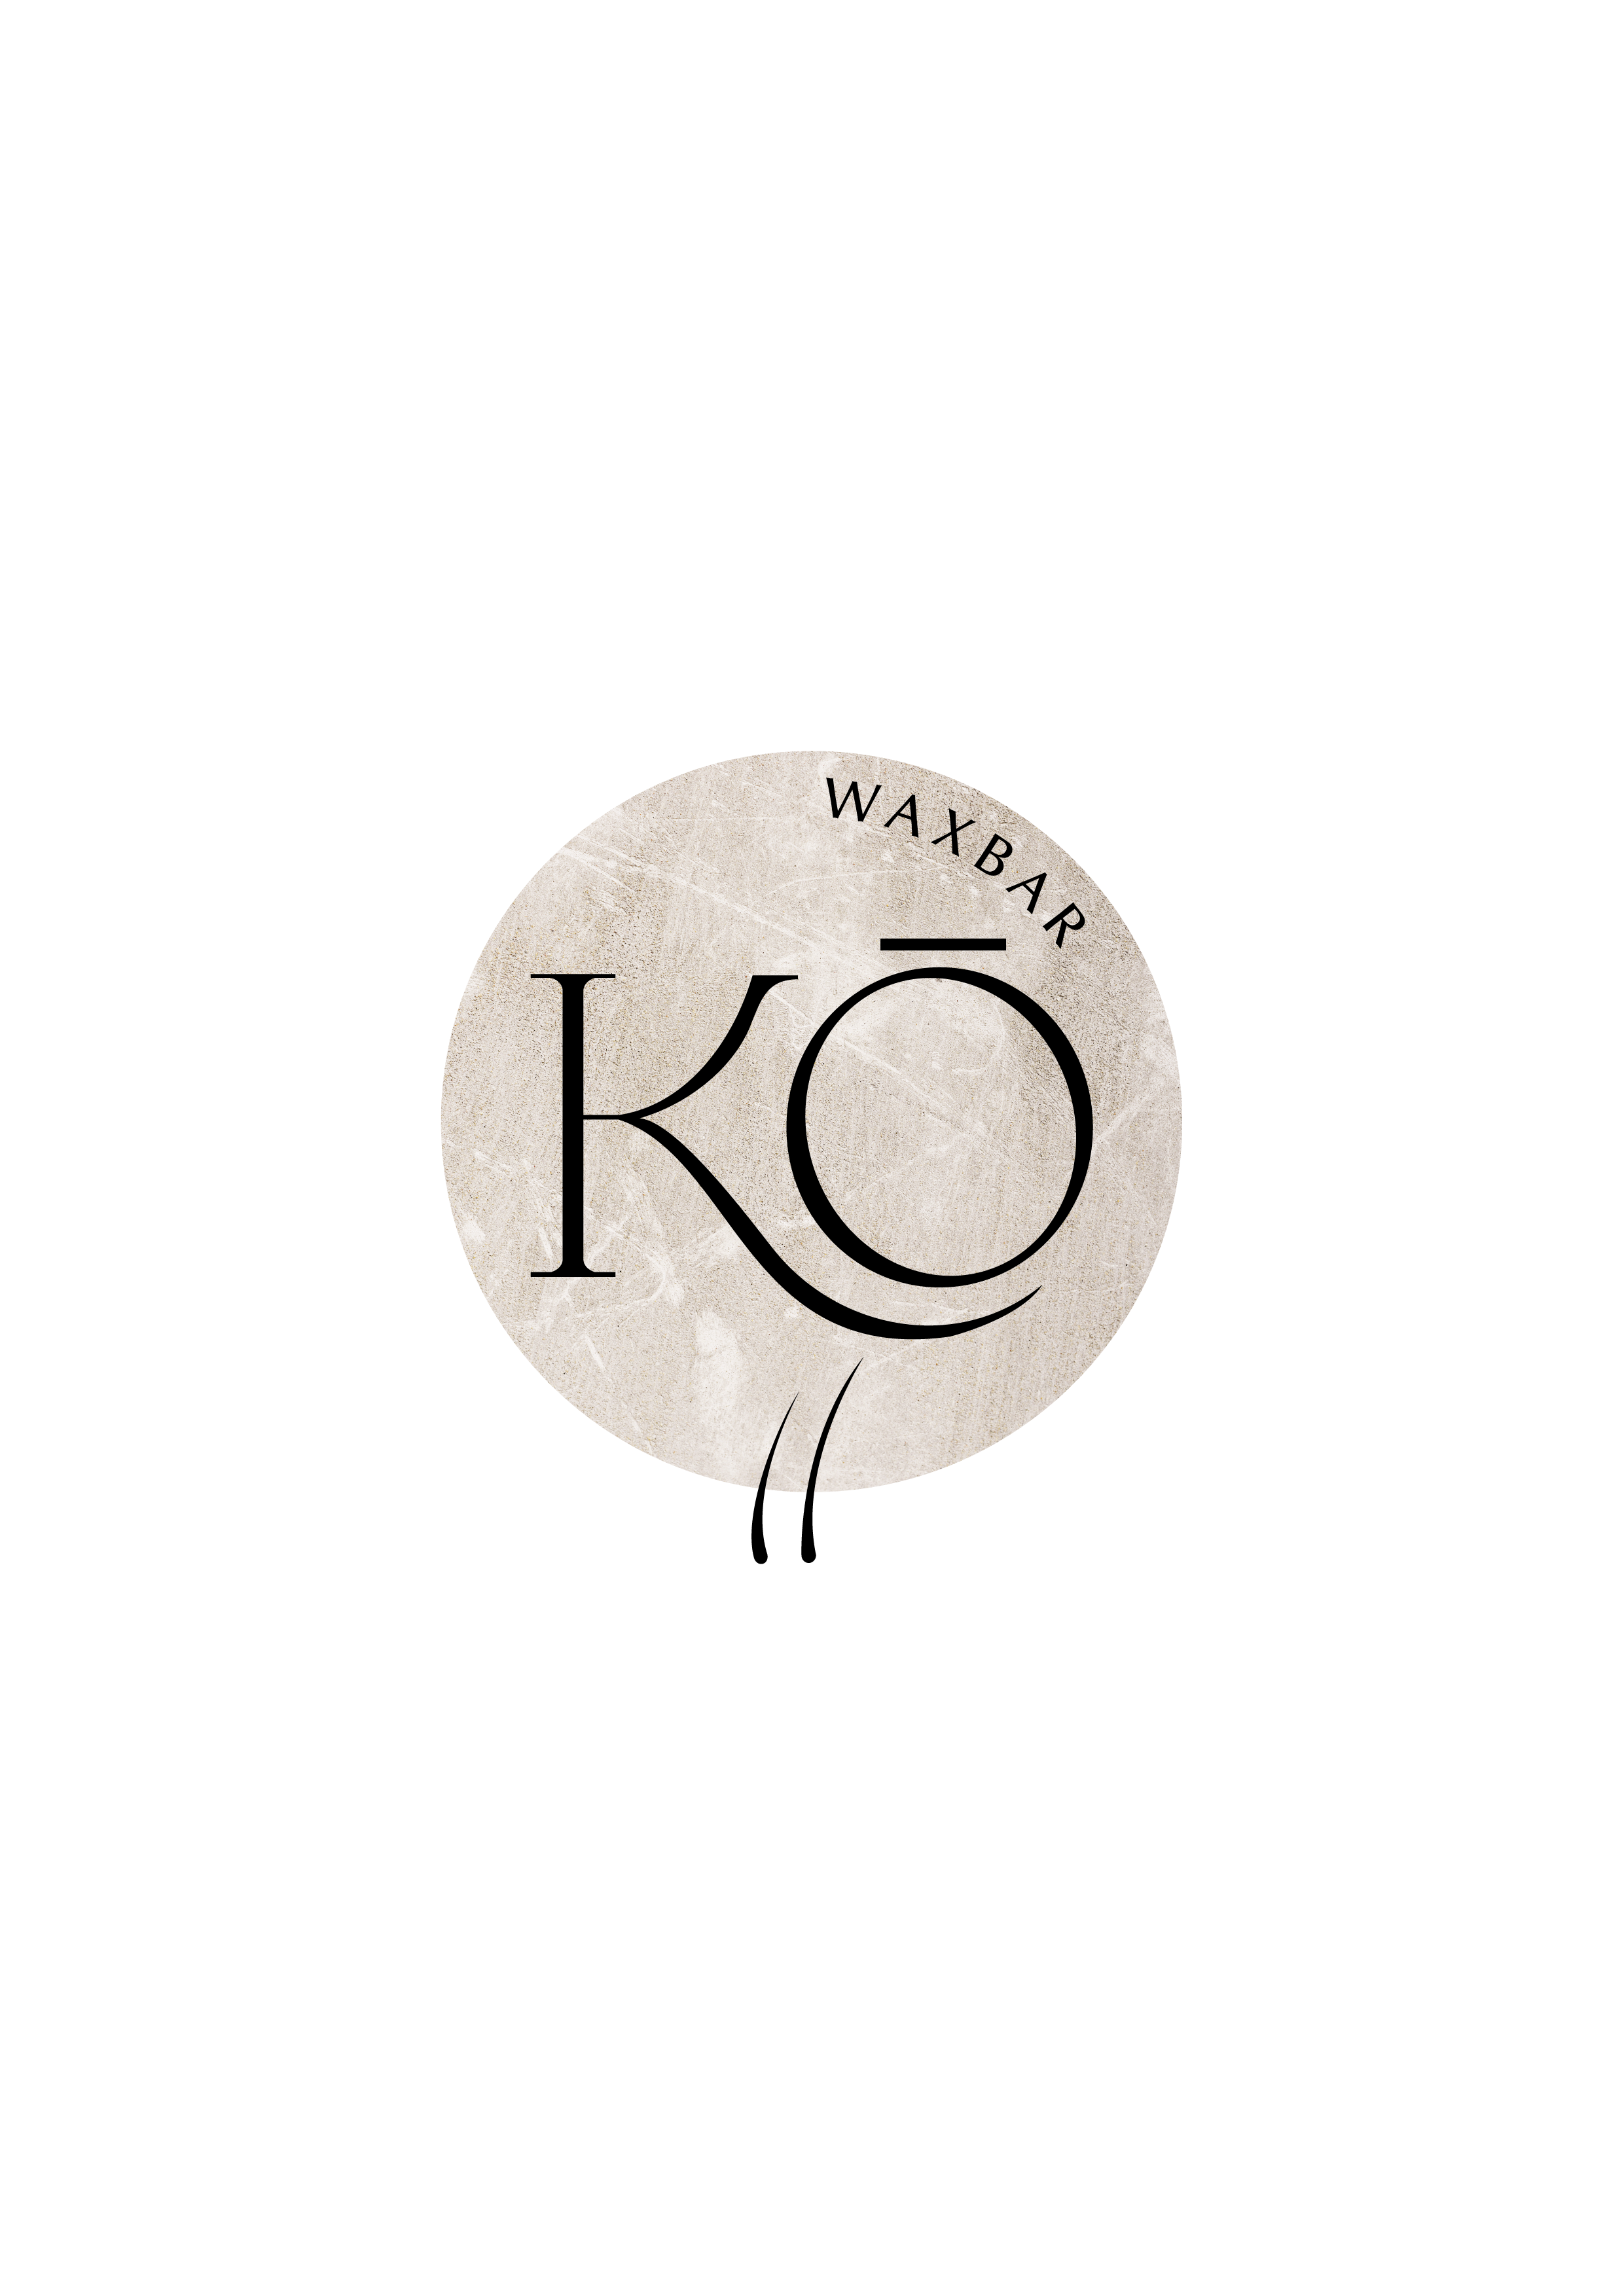 logo ko wax